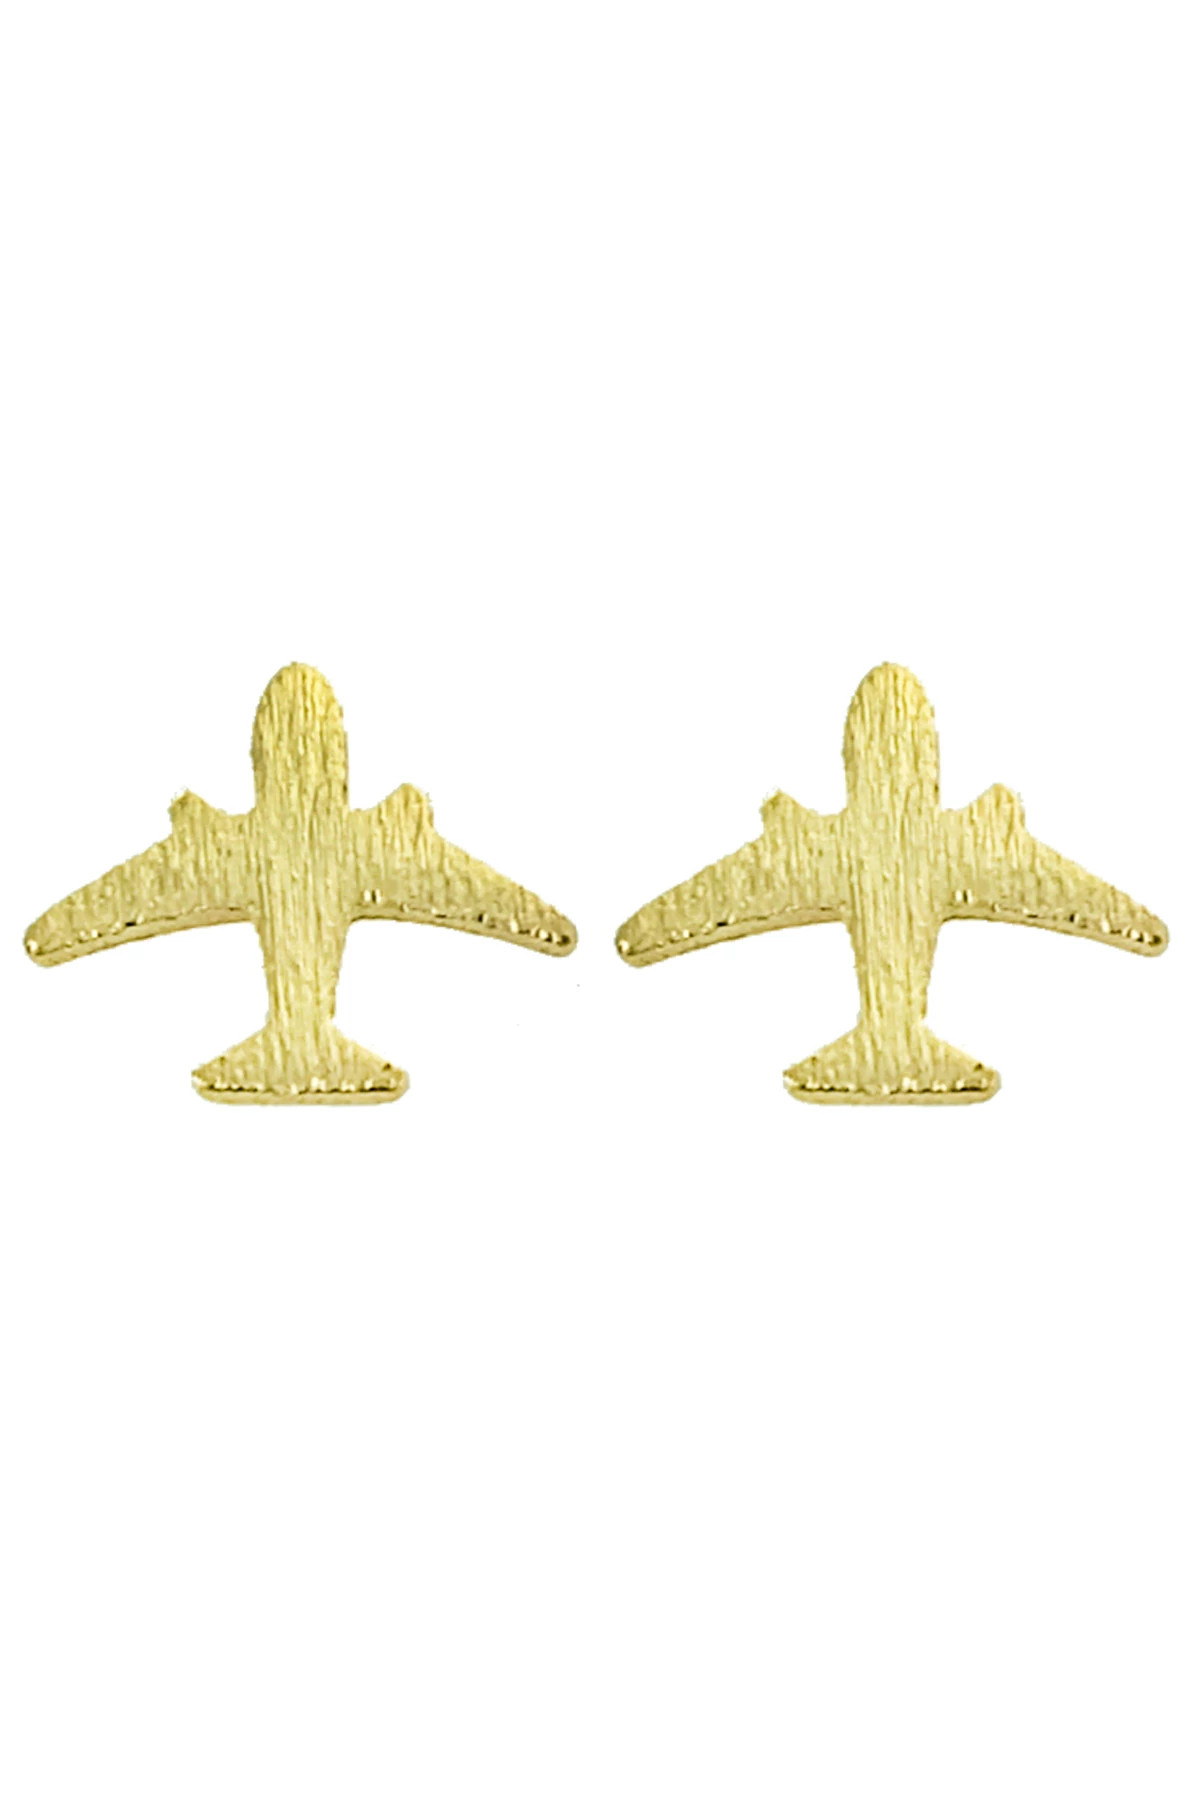 GOLD Airplane Stud Earrings image number 1